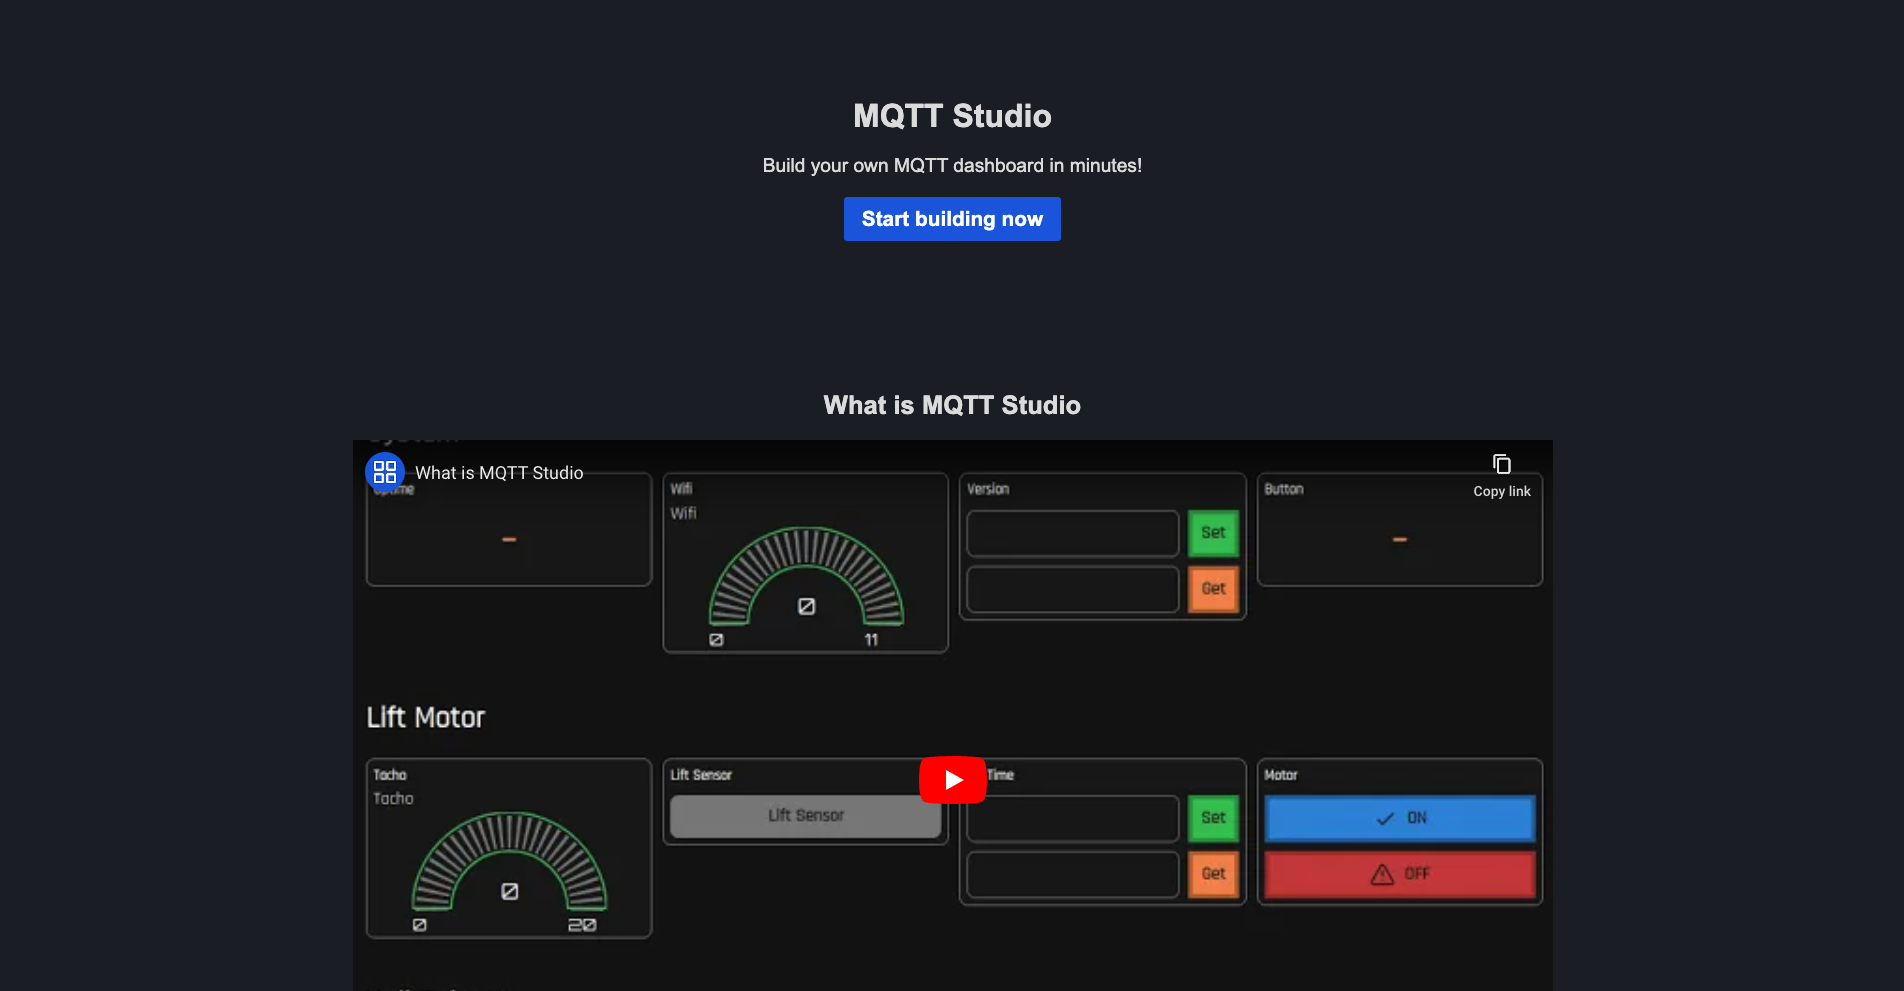 MQTT Studio